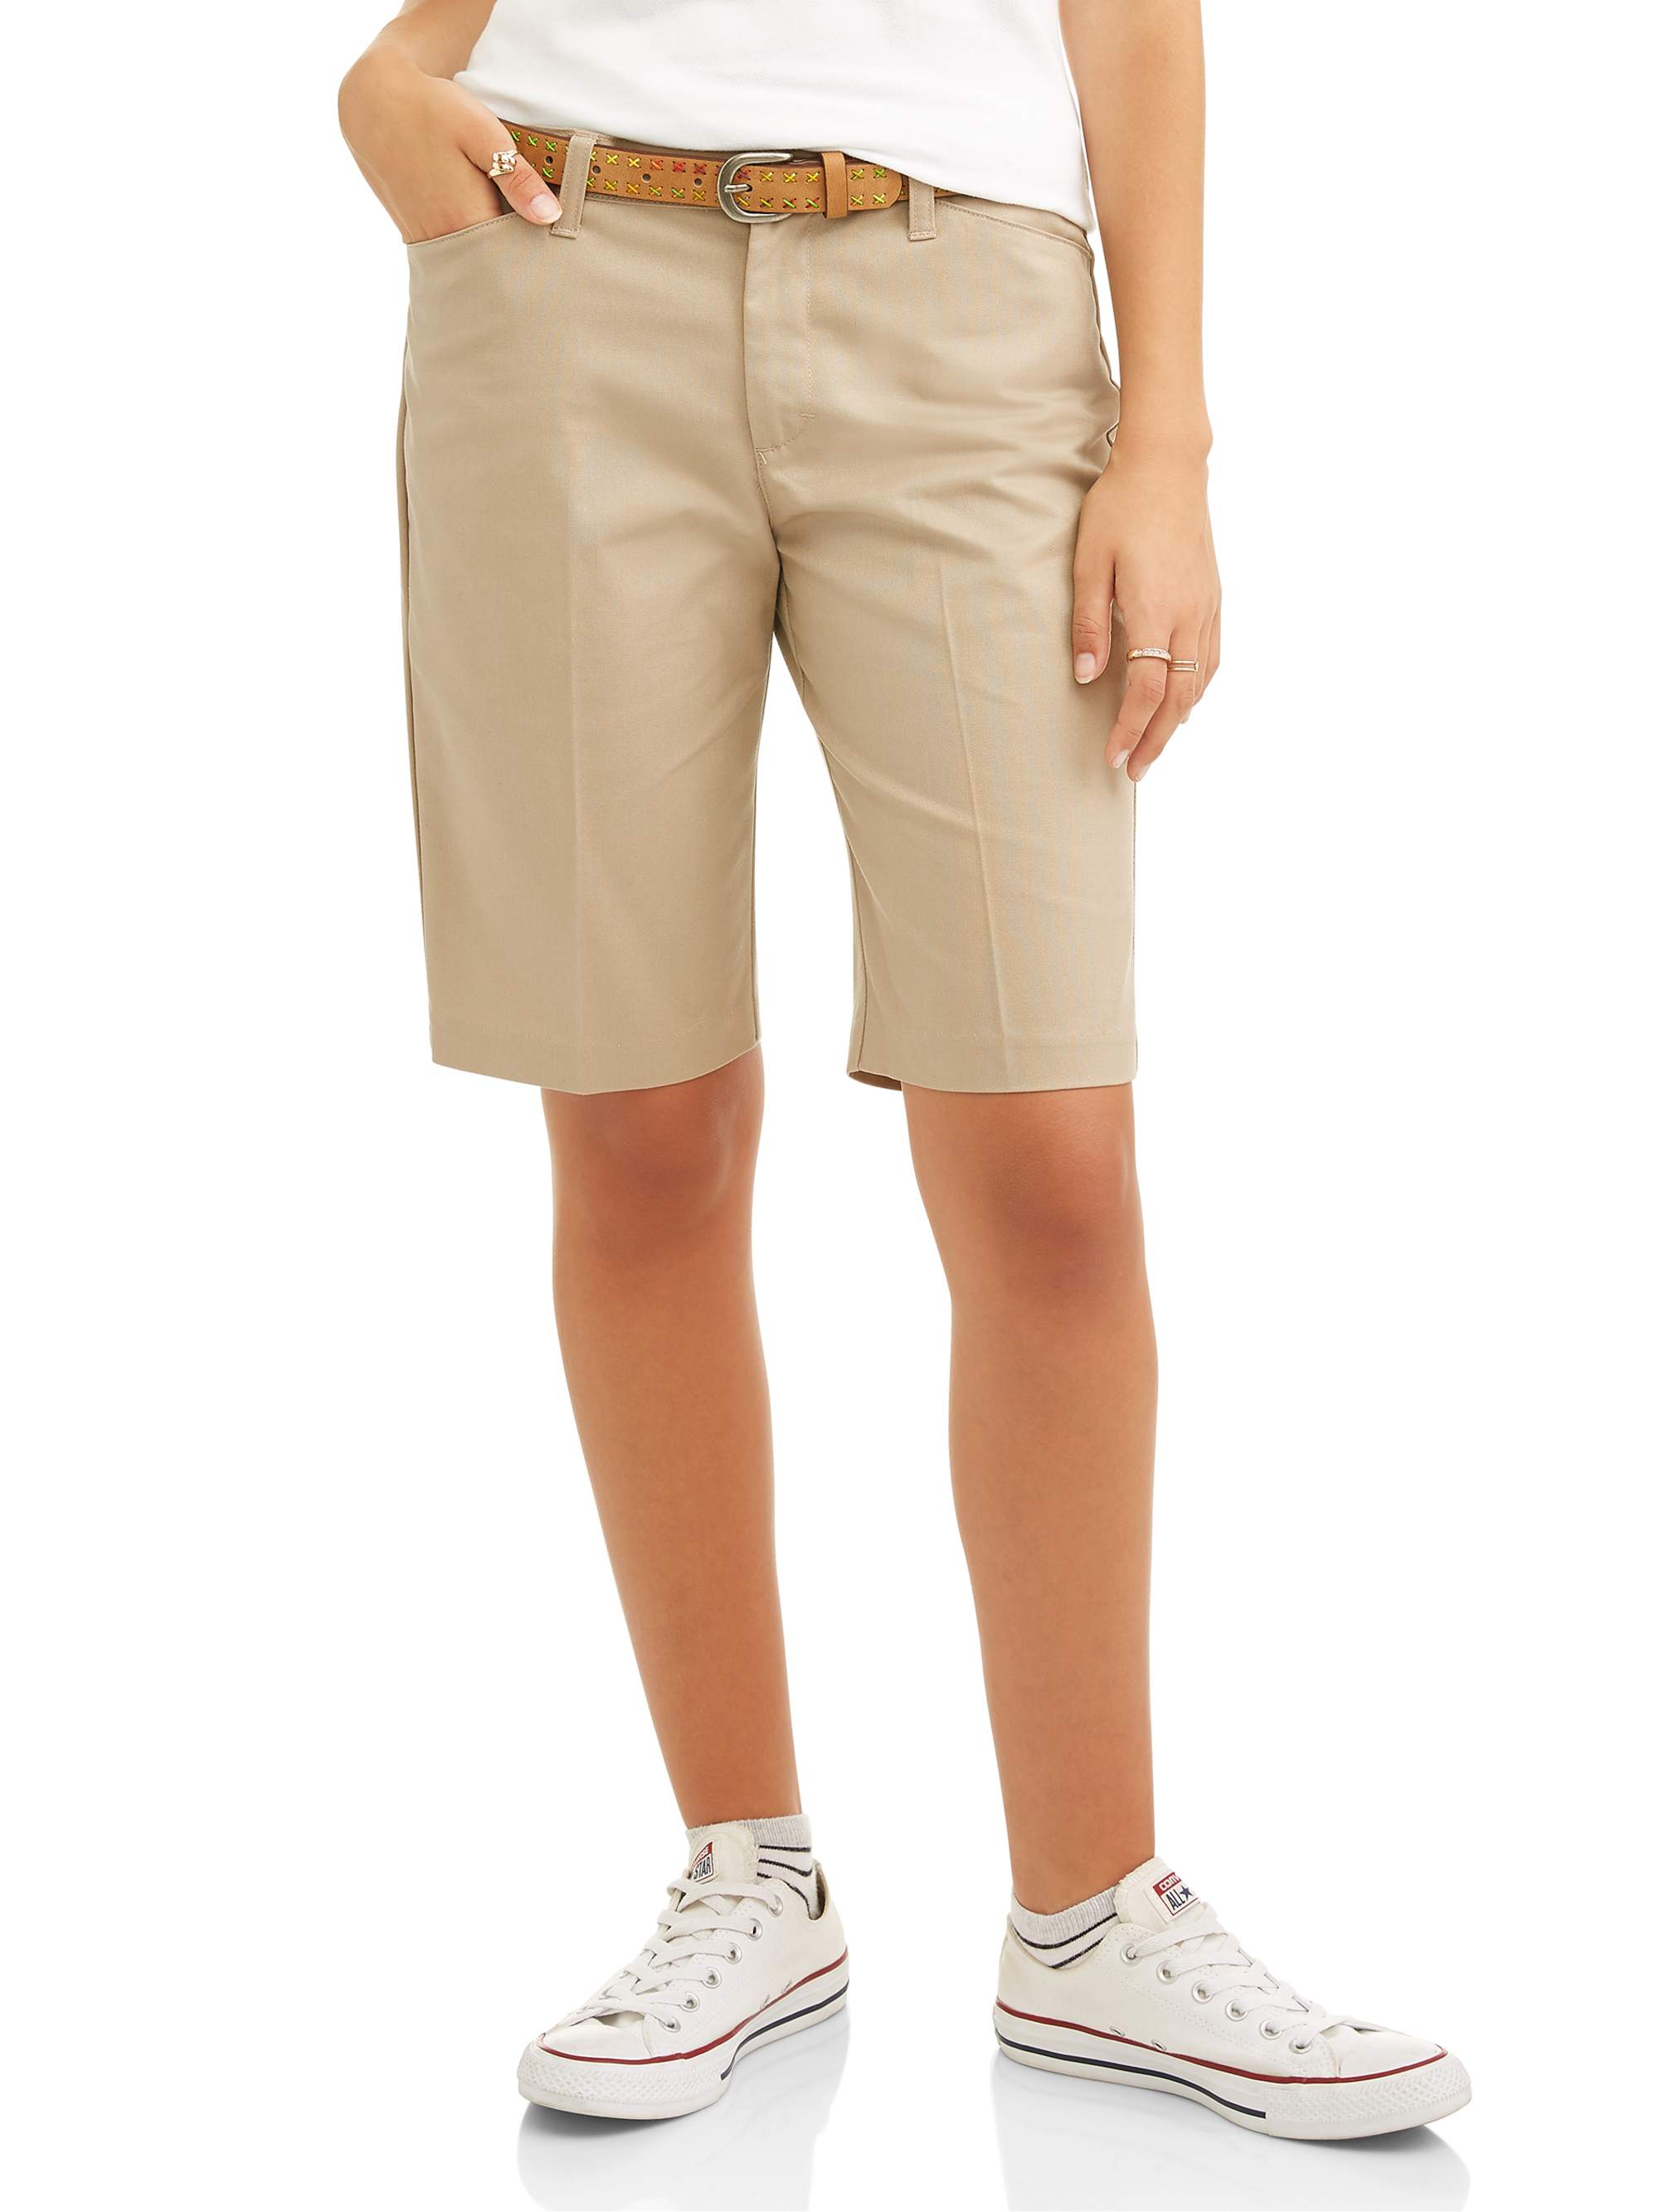 Real School Juniors' Flat Front Low Rise School Uniform Shorts - image 1 of 4